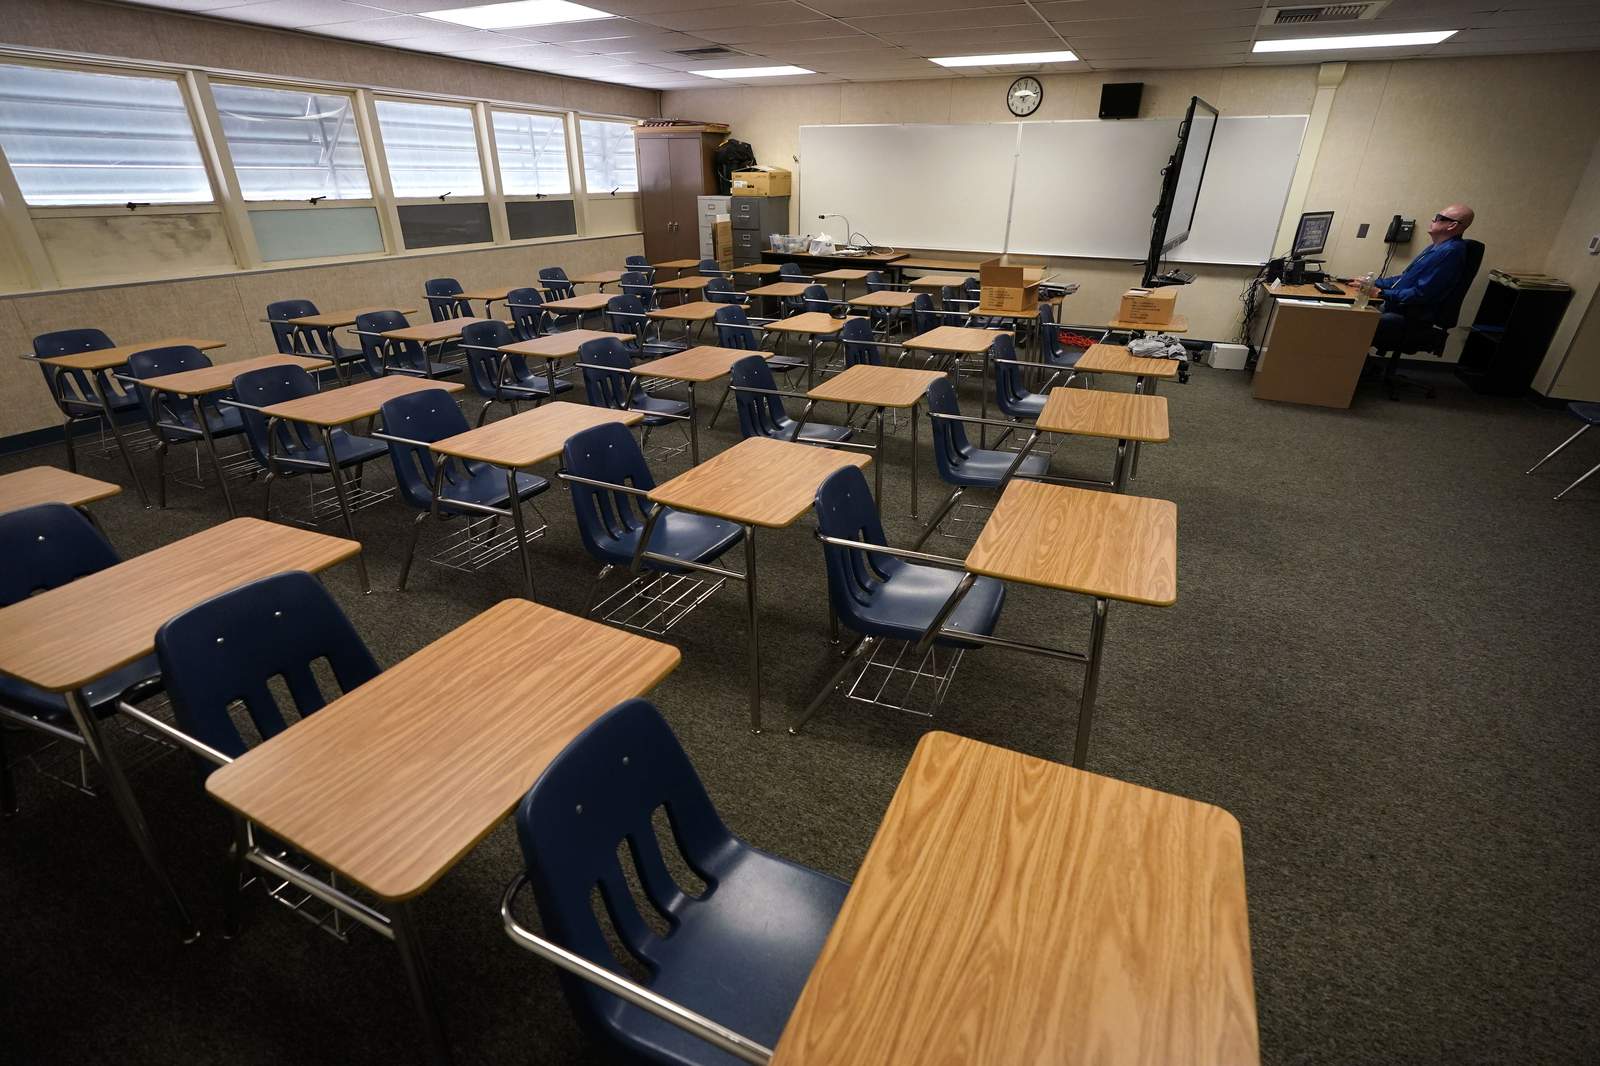 Federal investigators to probe Florida school policing plan